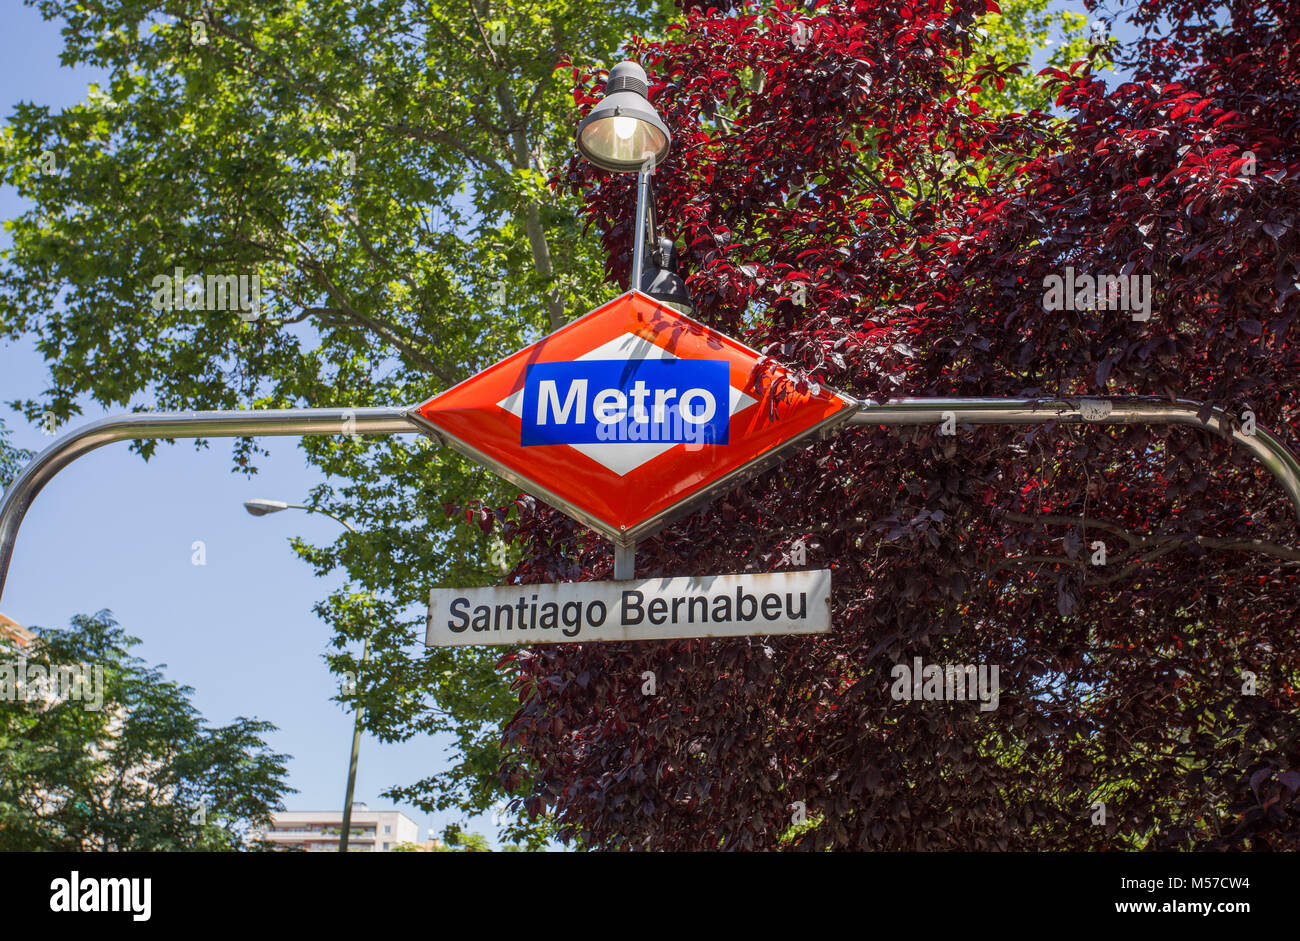 MADRID, SPAIN - JUNE 25, 2016 - Santiago Bernabeu metro station sign, Madrid, Spain Stock Photo